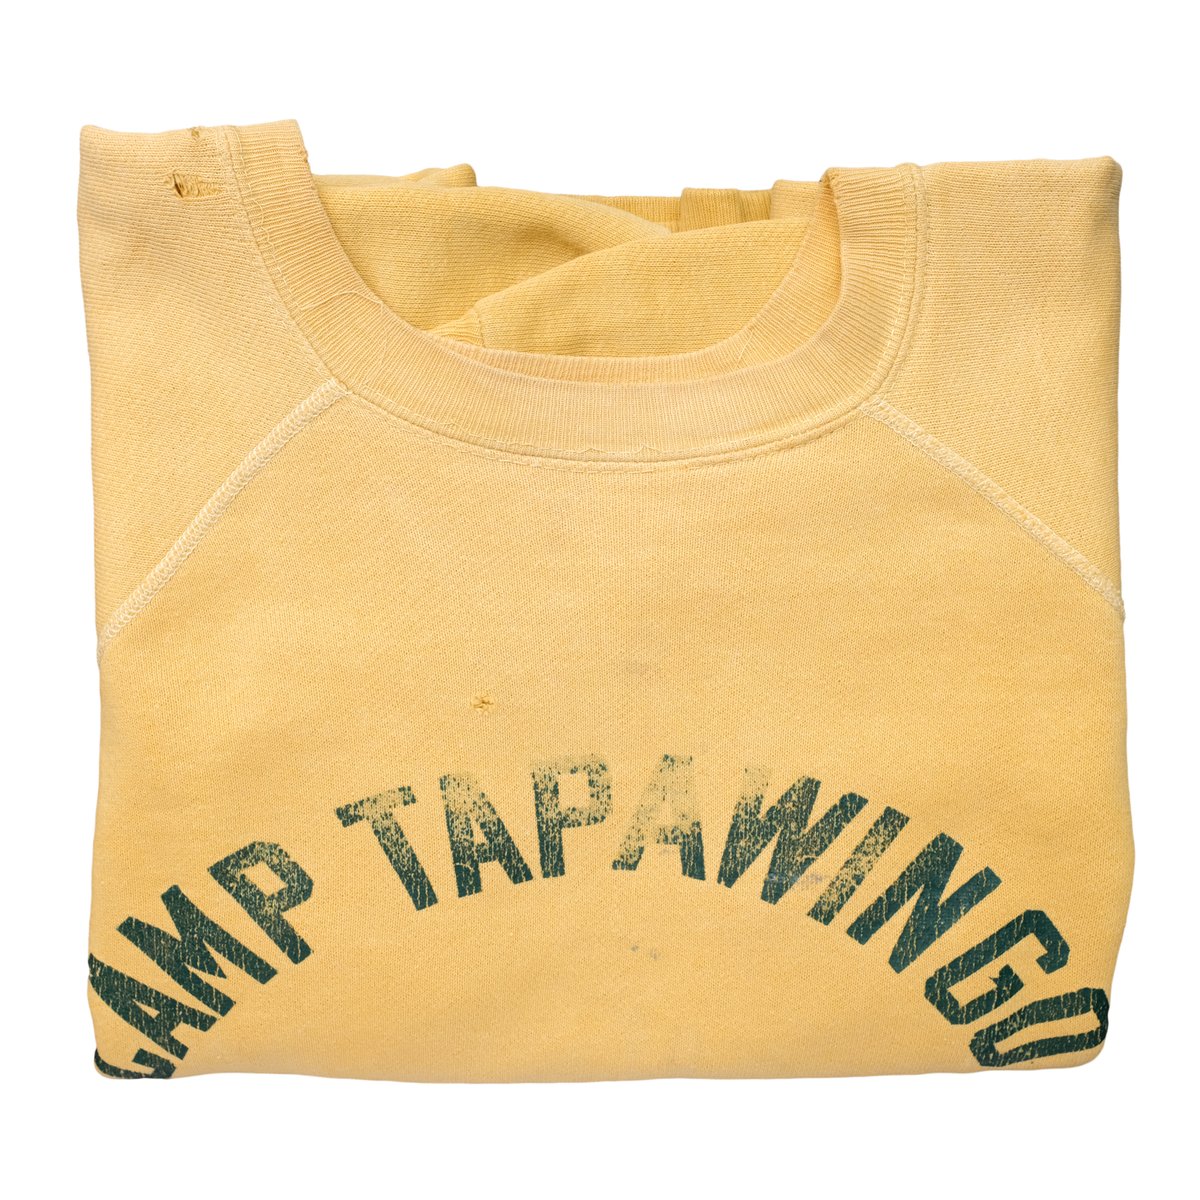 Image of Vintage 1960's Sunfaded Yellow Camp Tapawingo Sweatshirt